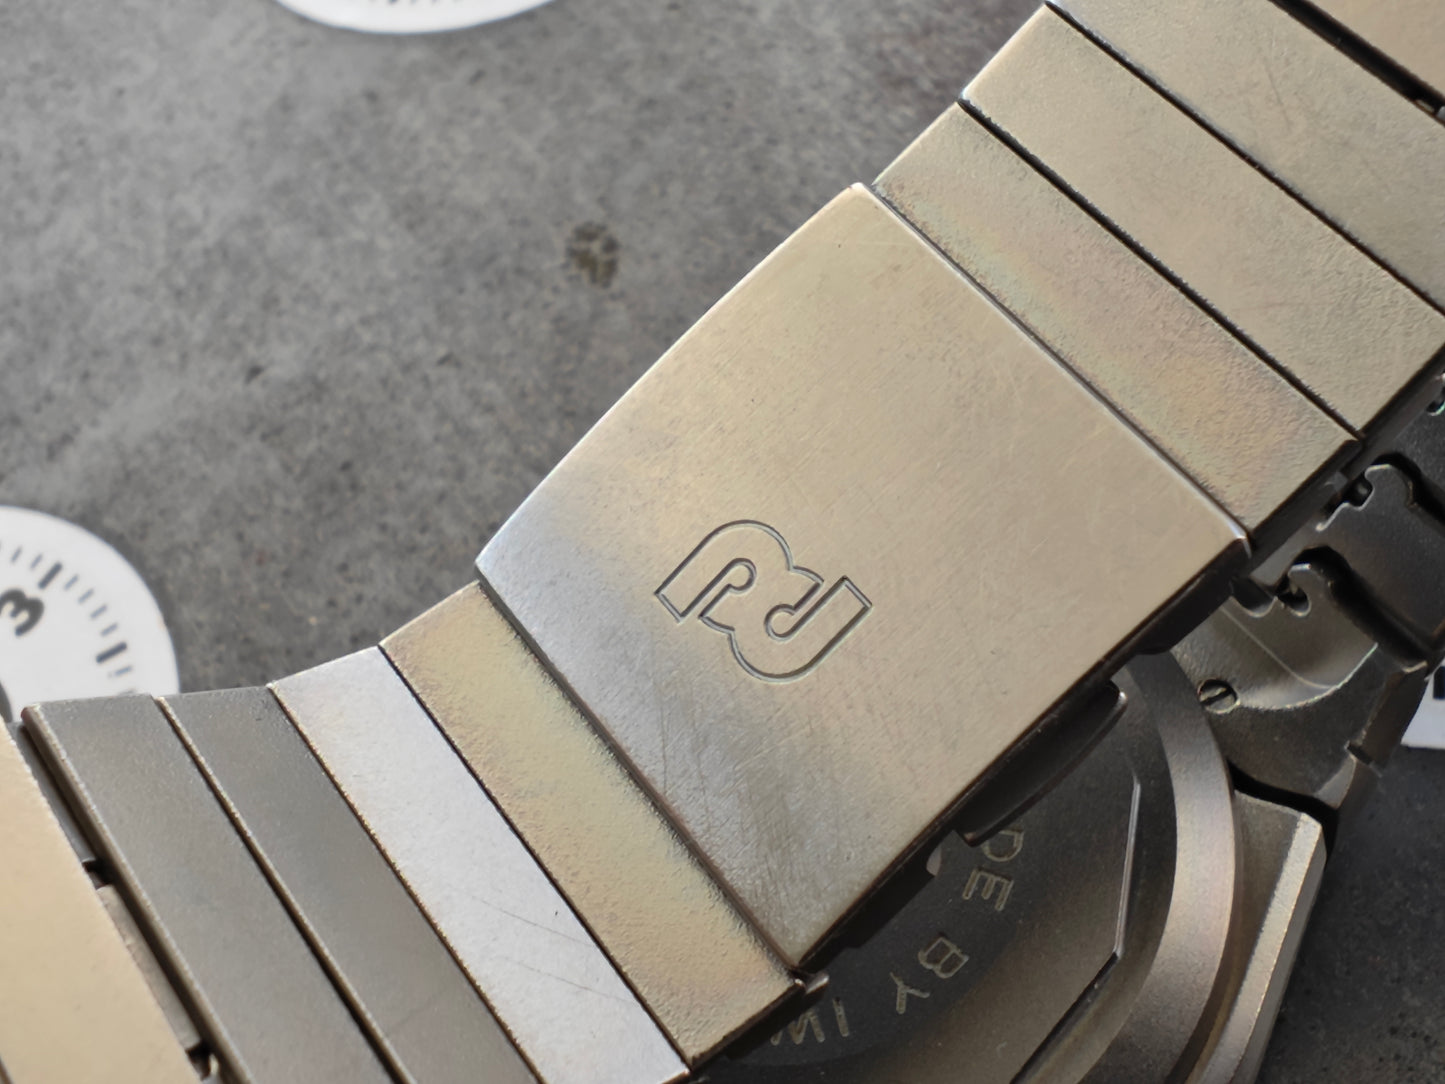 IWC Porsche Design Chronograph 3702 / 20cm wrist size